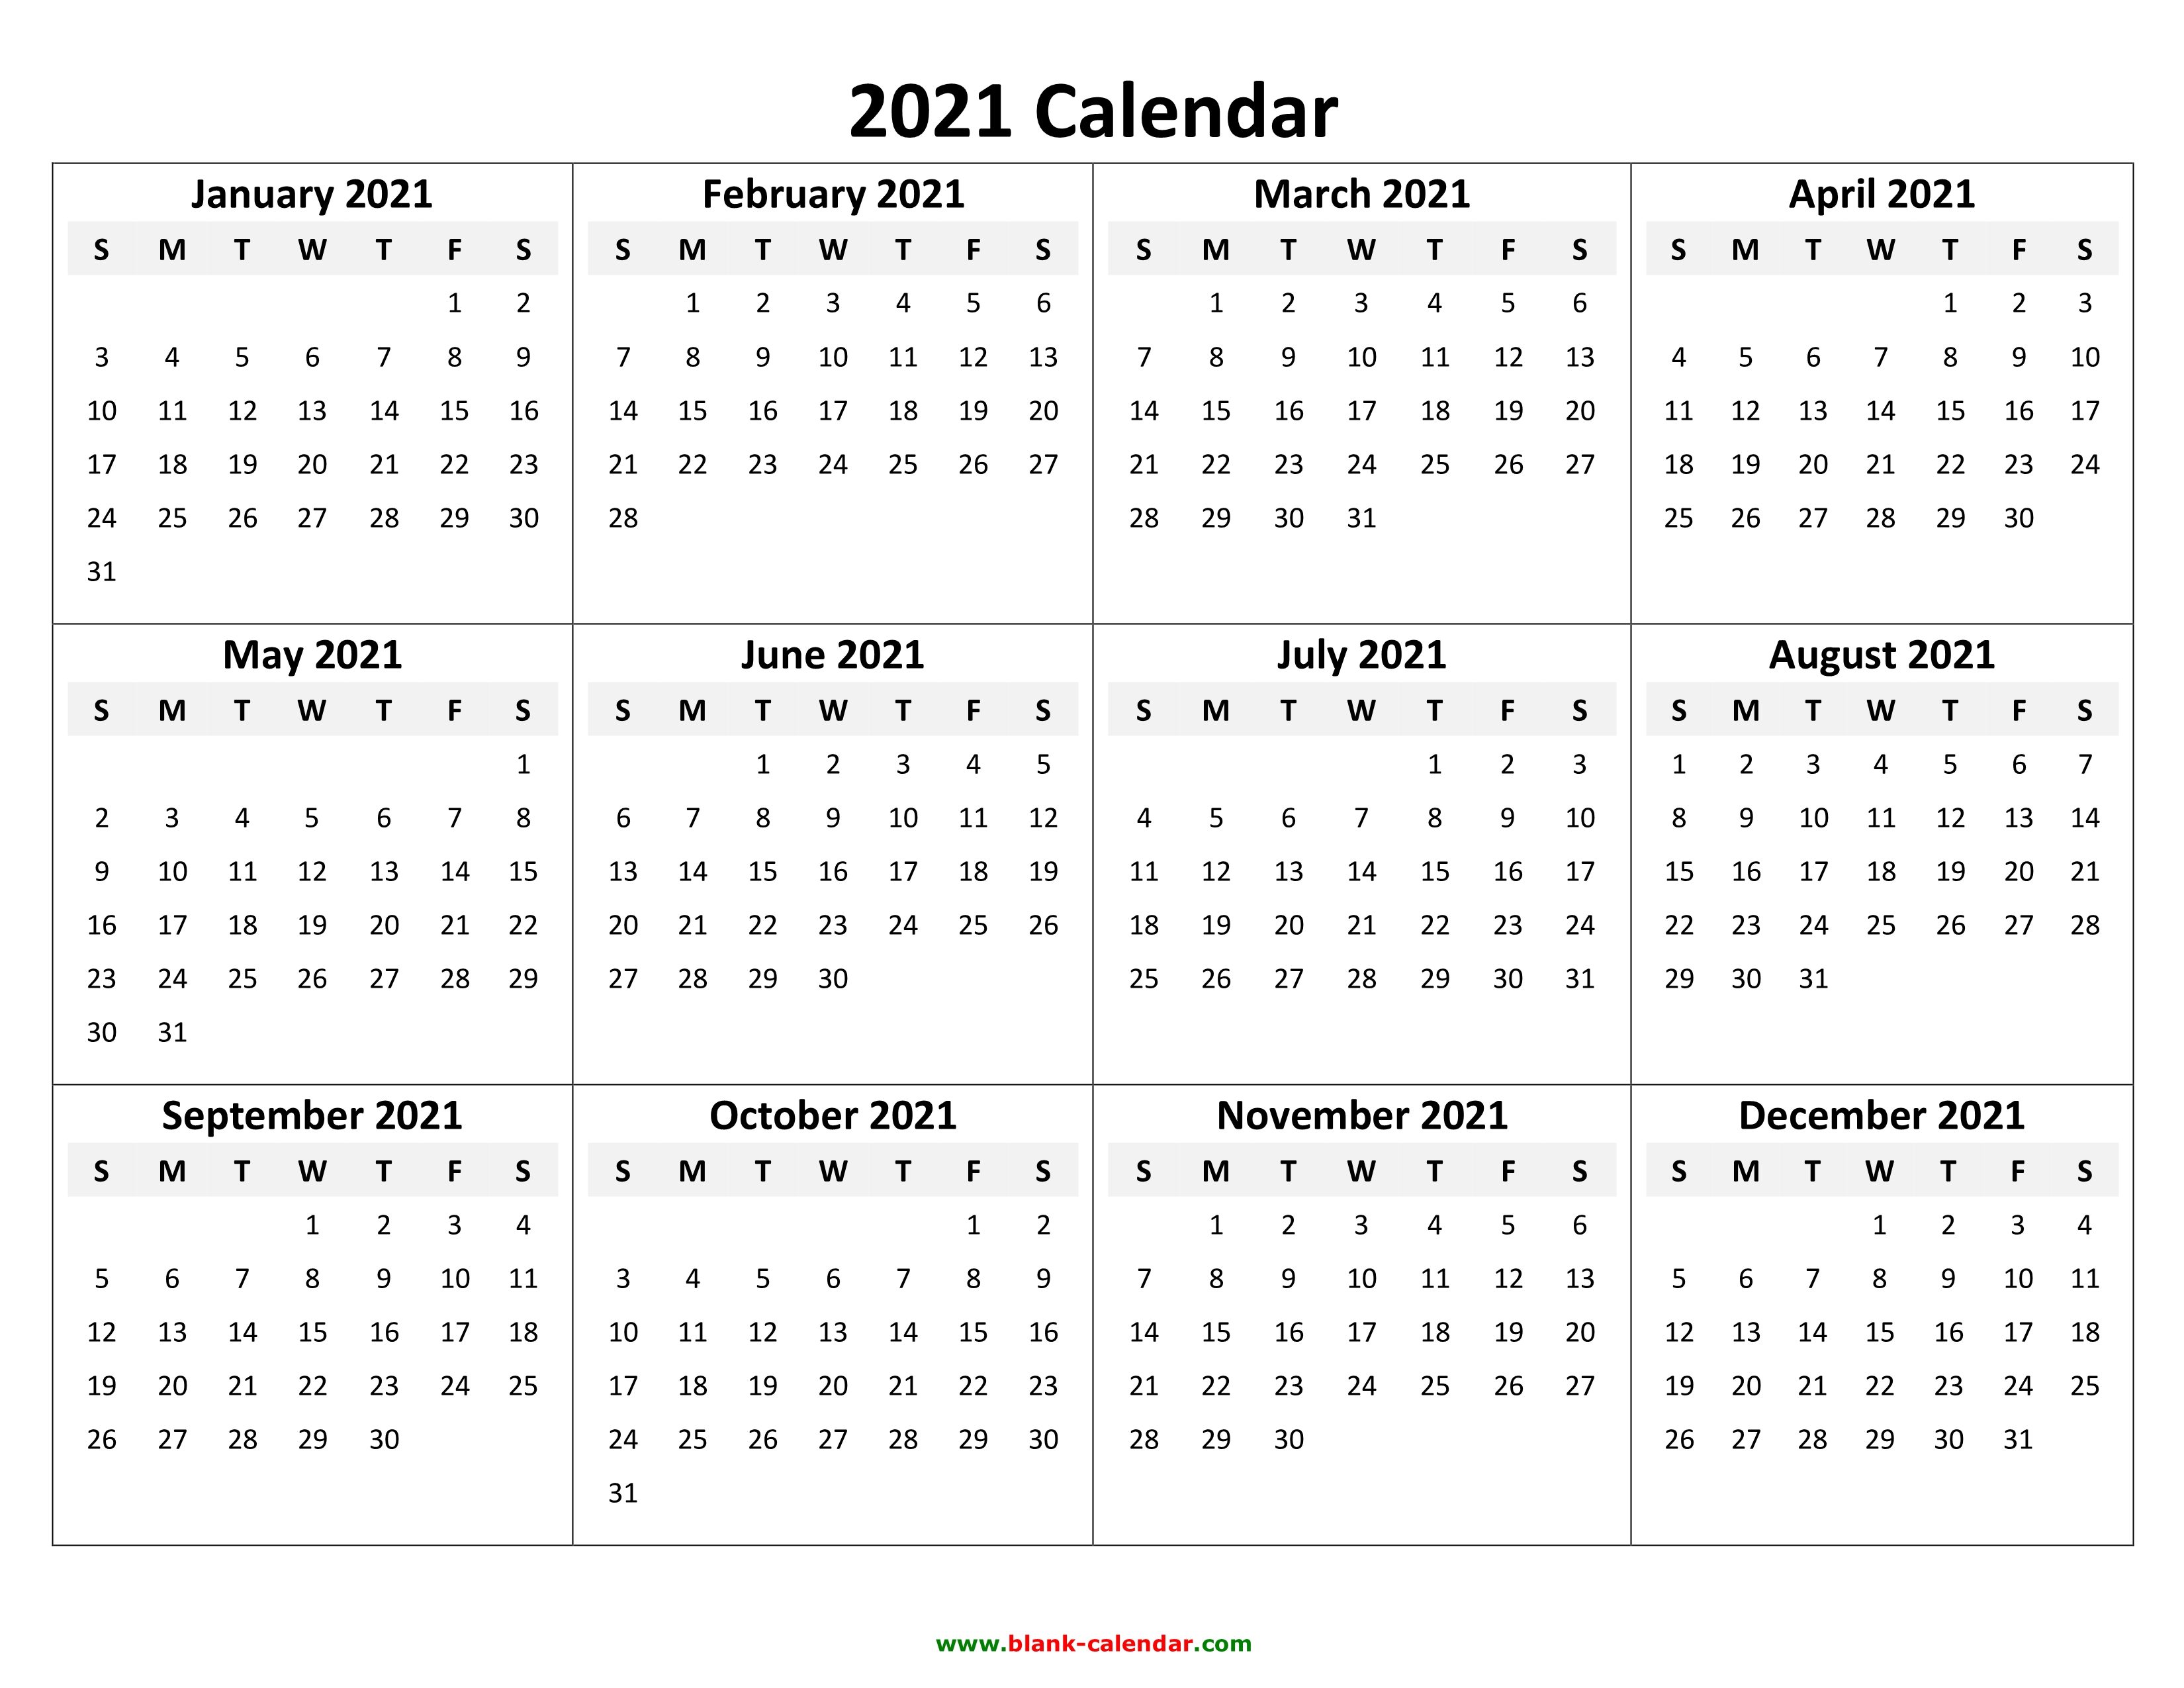 Yearly Calendar 2021